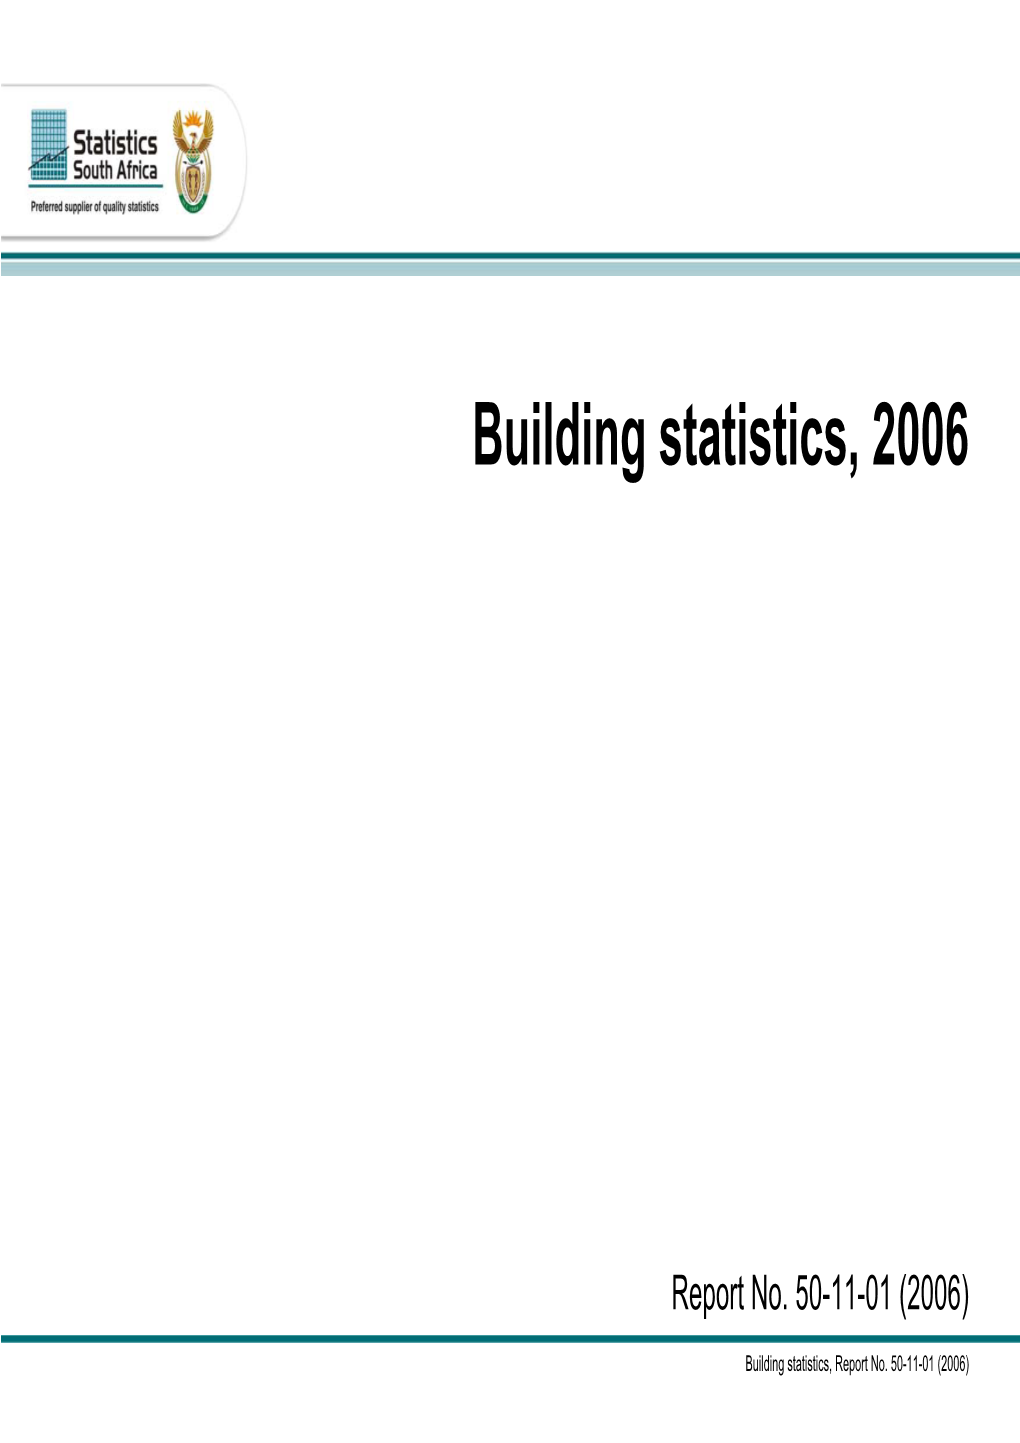 Building Statistics, 2006